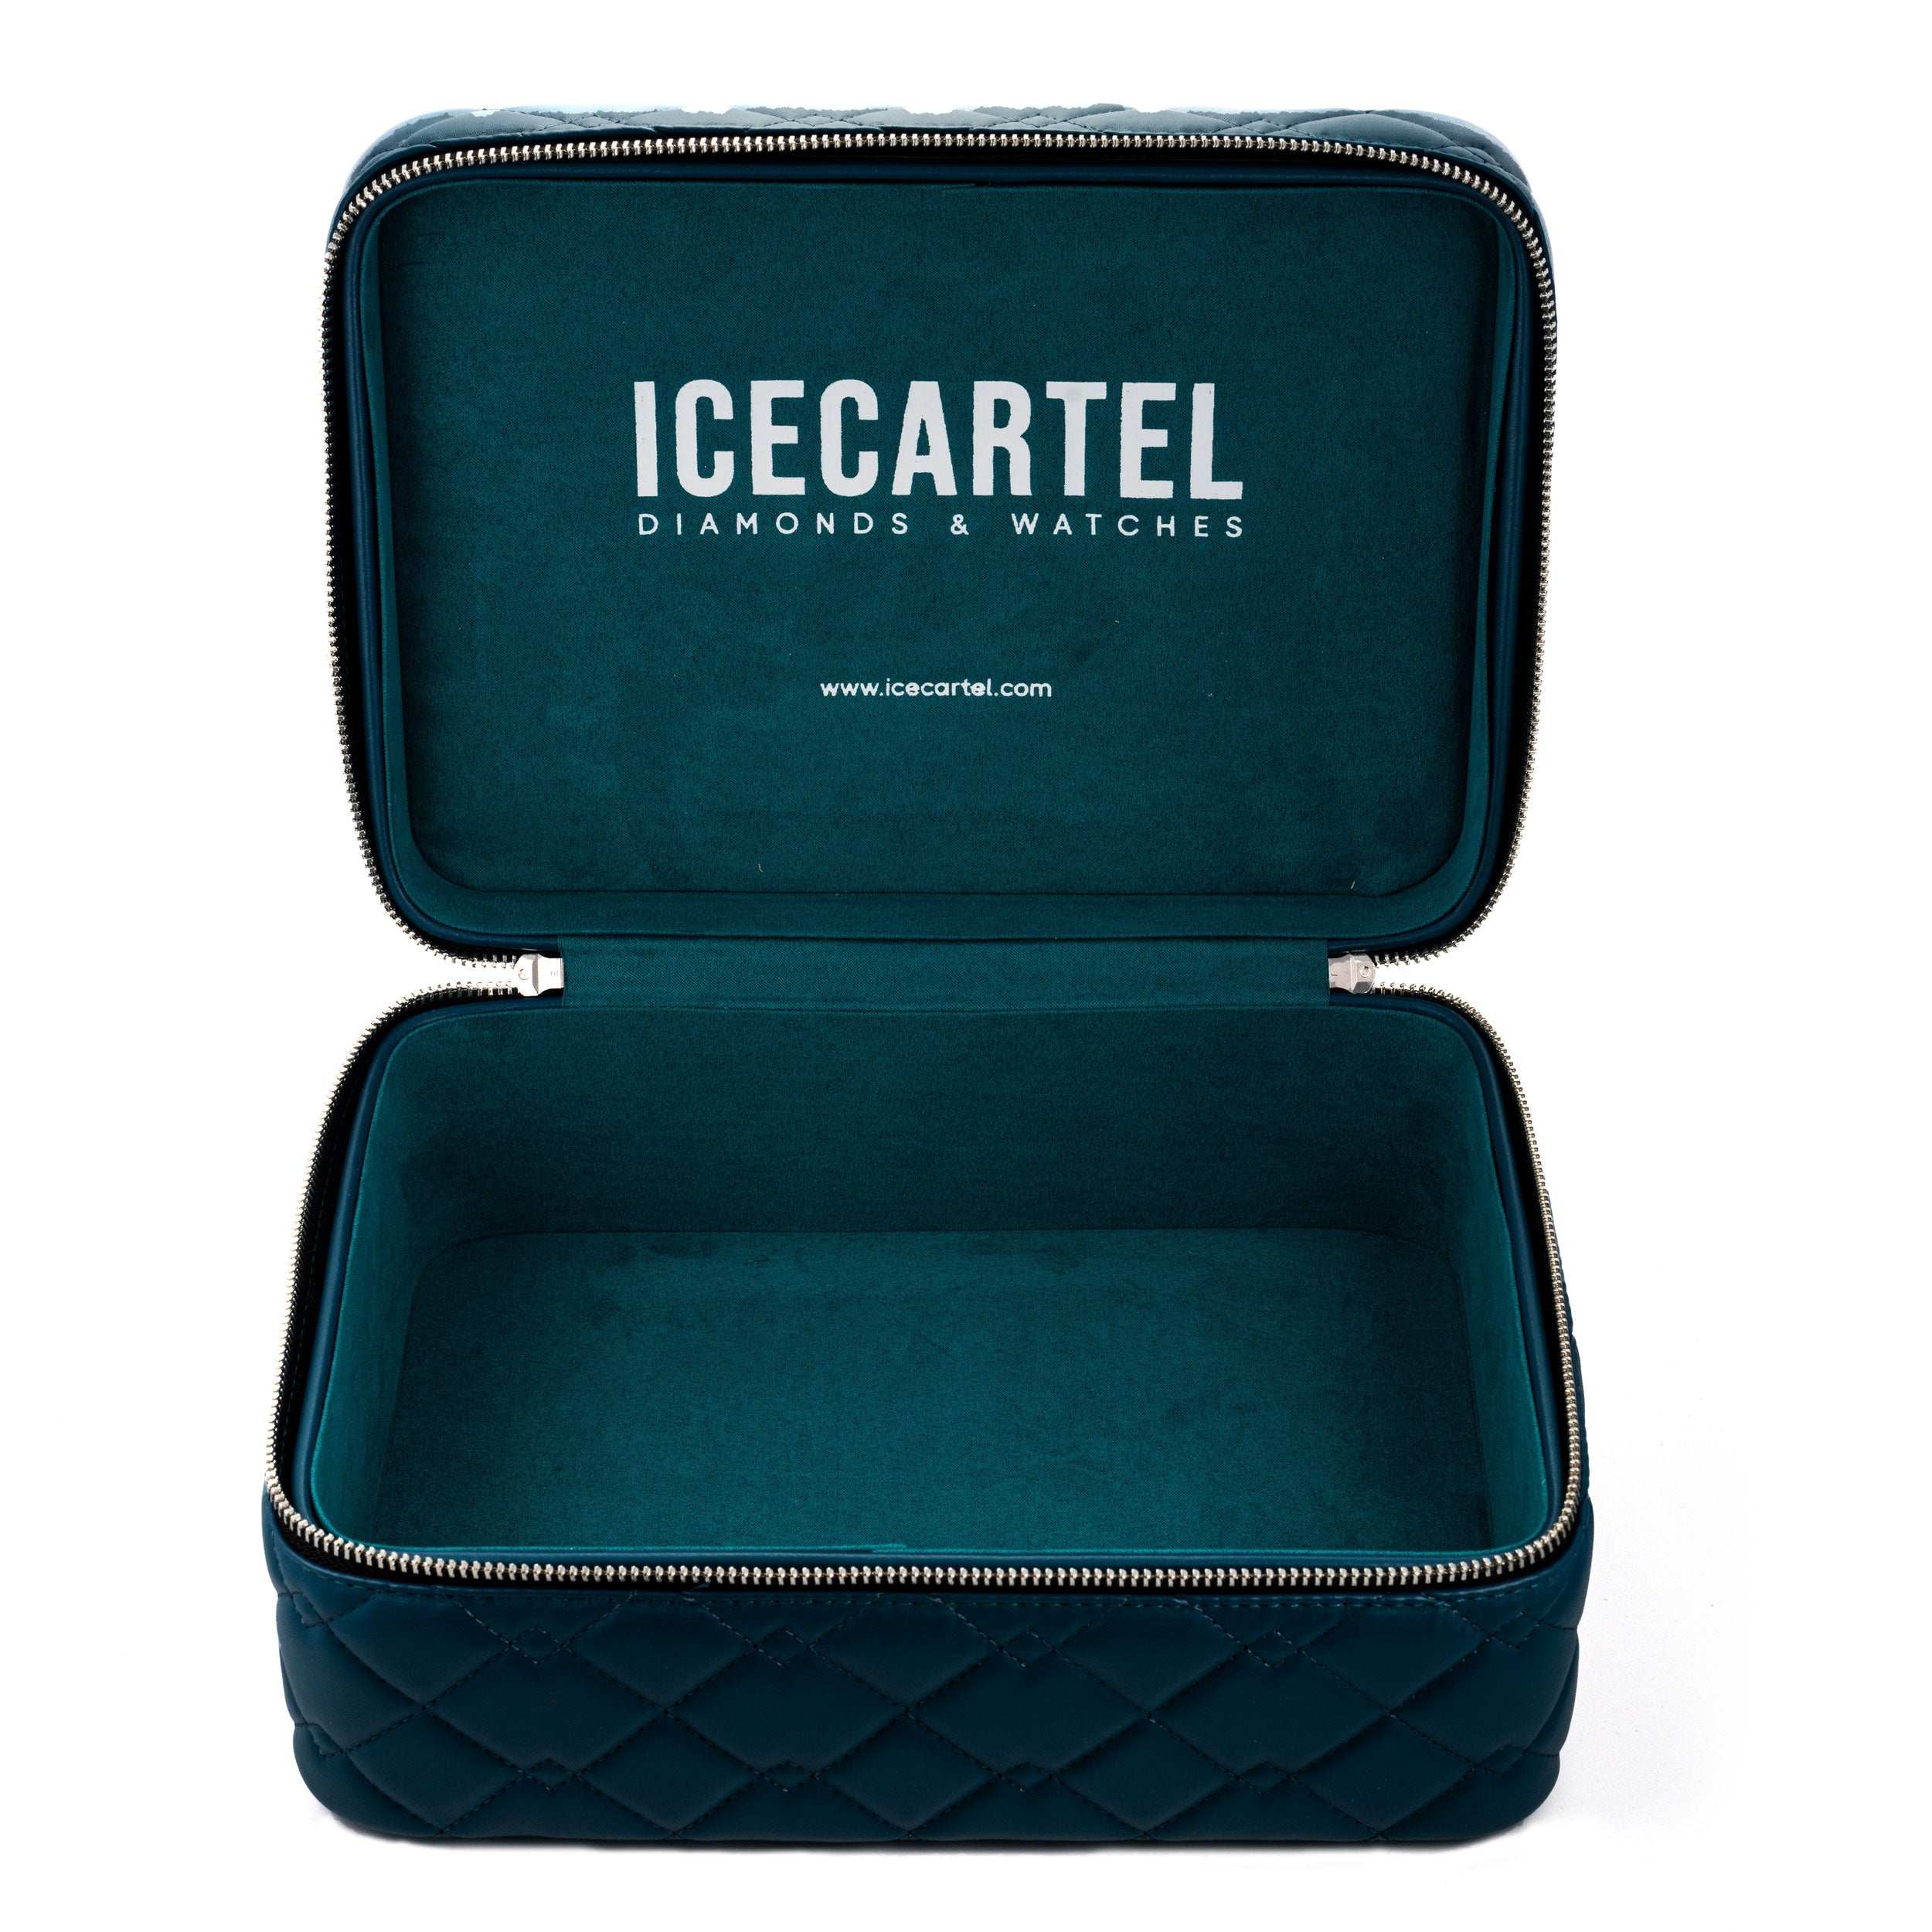 Icecartel Custom Leather Jewelry Box Front navy